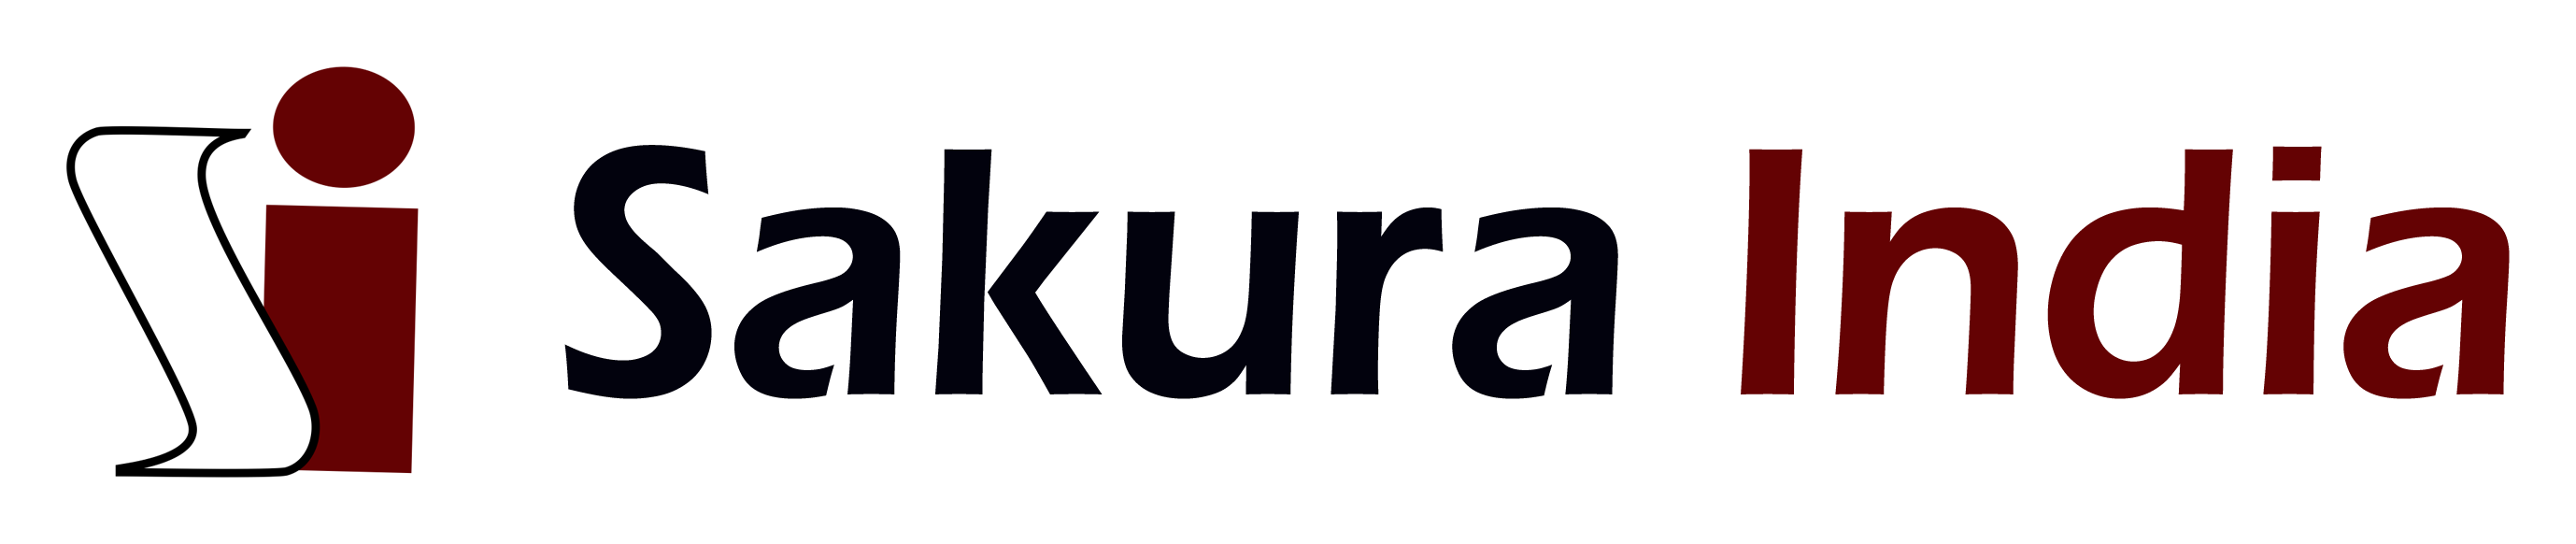 sakura-logo_text